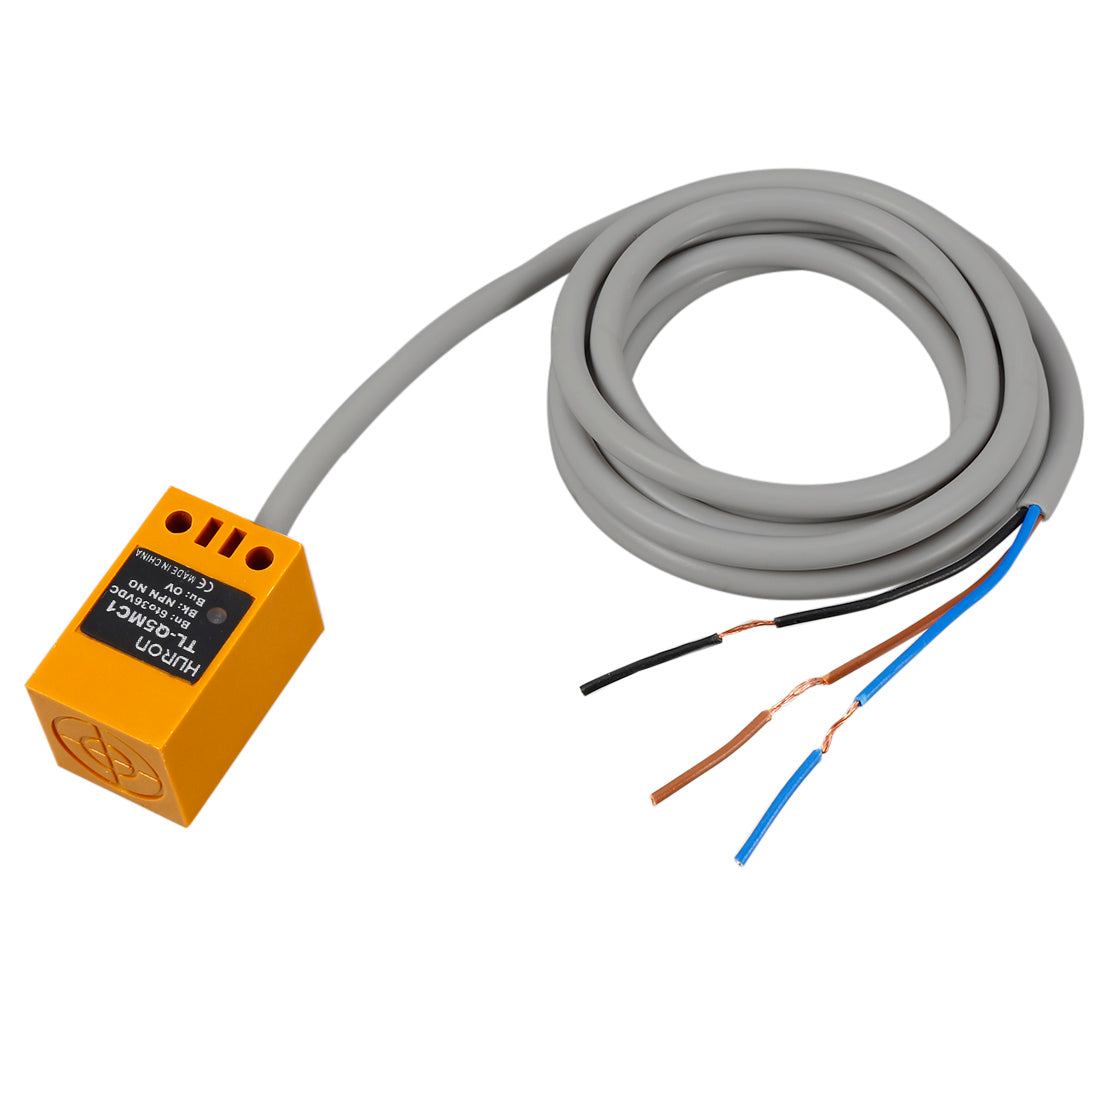 uxcell Uxcell TL-Q5MC1 NPN NO 5mm Inductive Proximity Sensor Switch 3 Wire DC6-36V